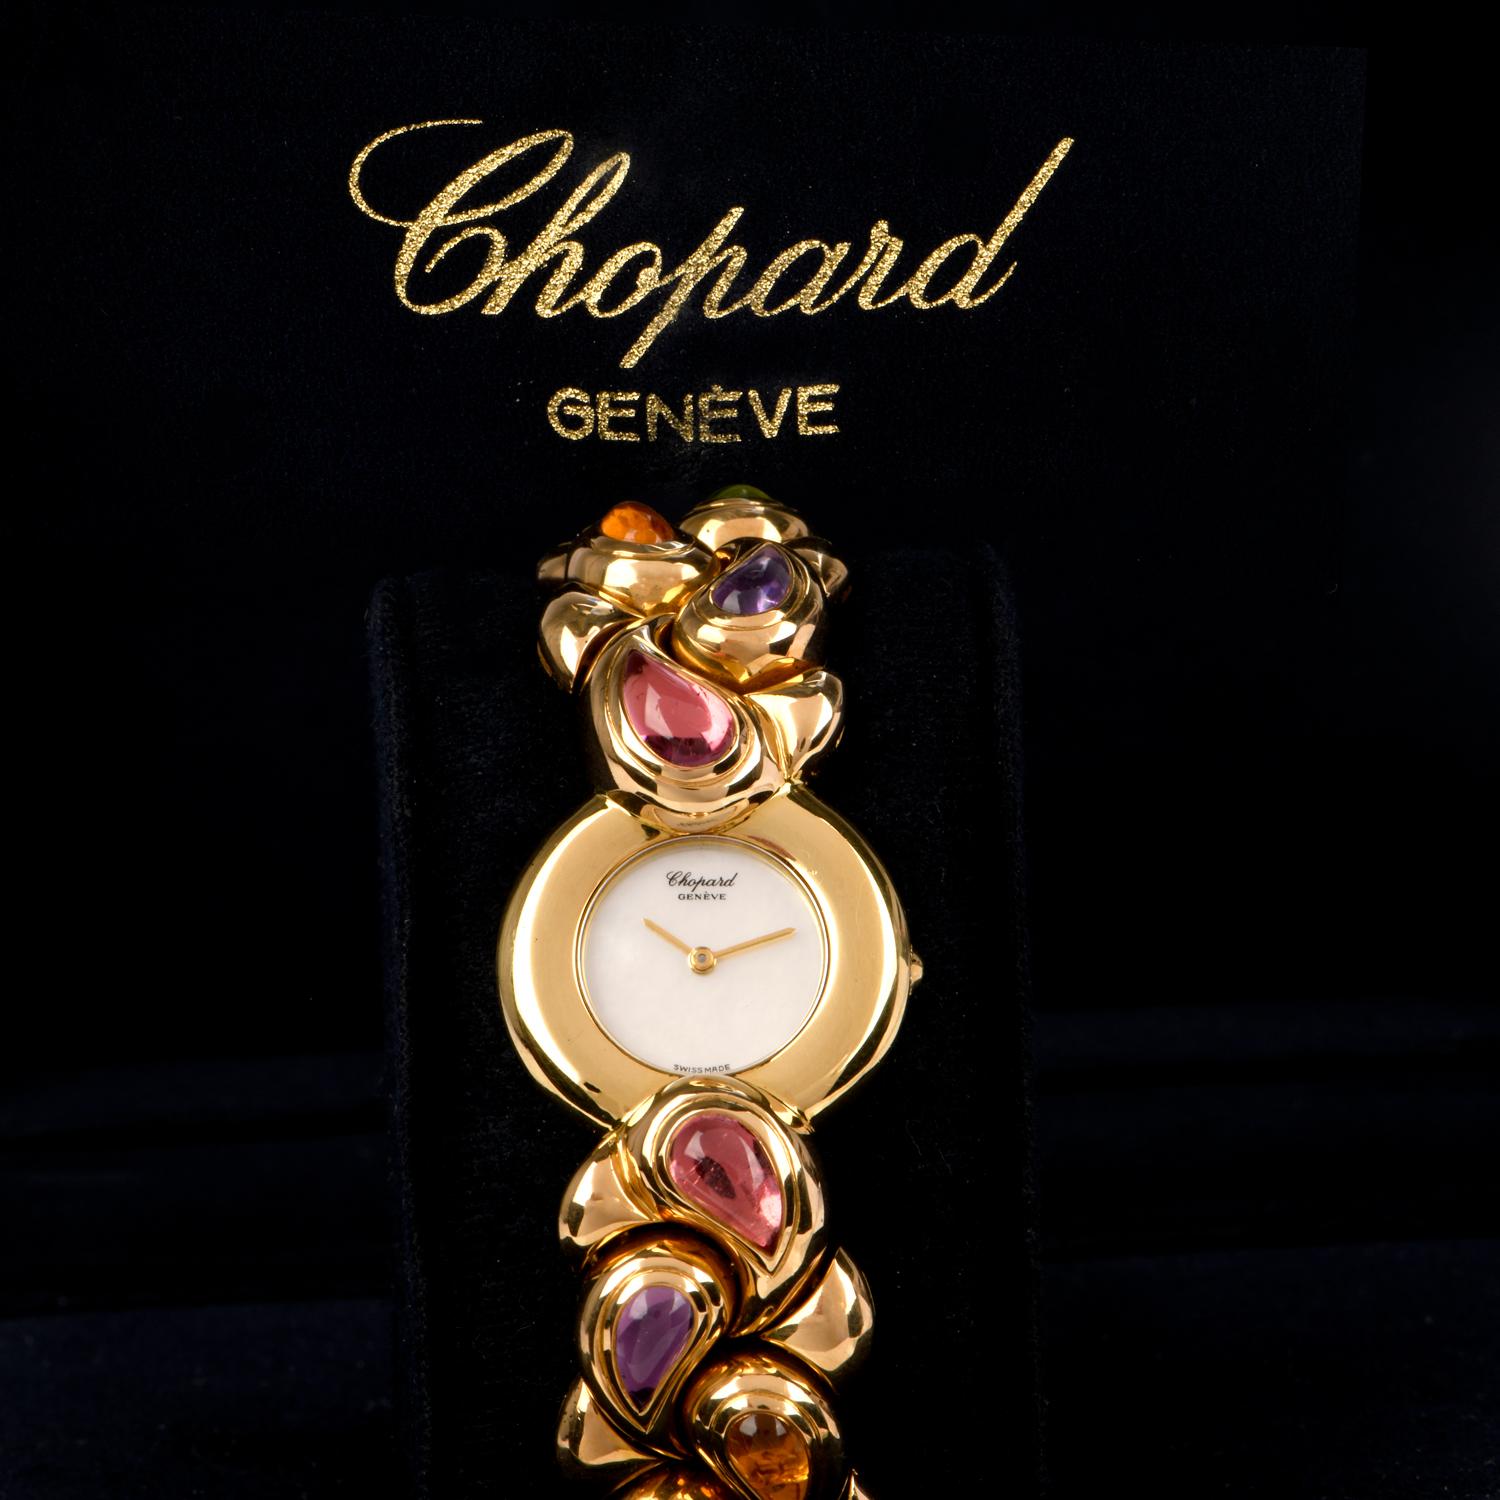 la maison chopard crafts this annual award’s crystal base & 118-gram